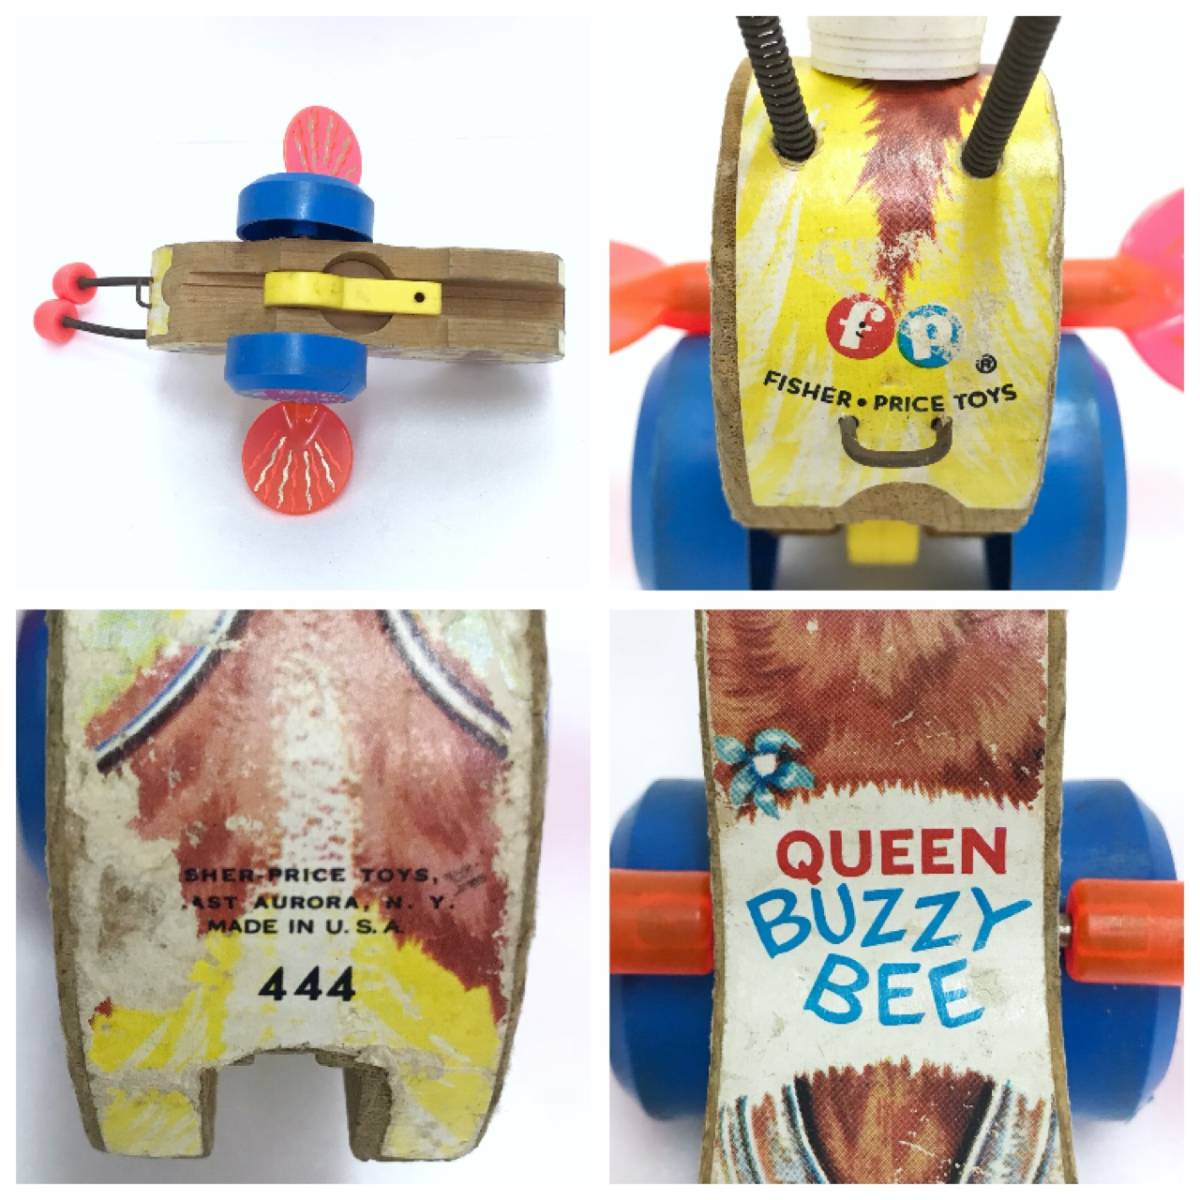  Fischer price Queen baji- Be pull toy toy toy QUEEN BUZZY BEE retro Old Vintage antique D-2290